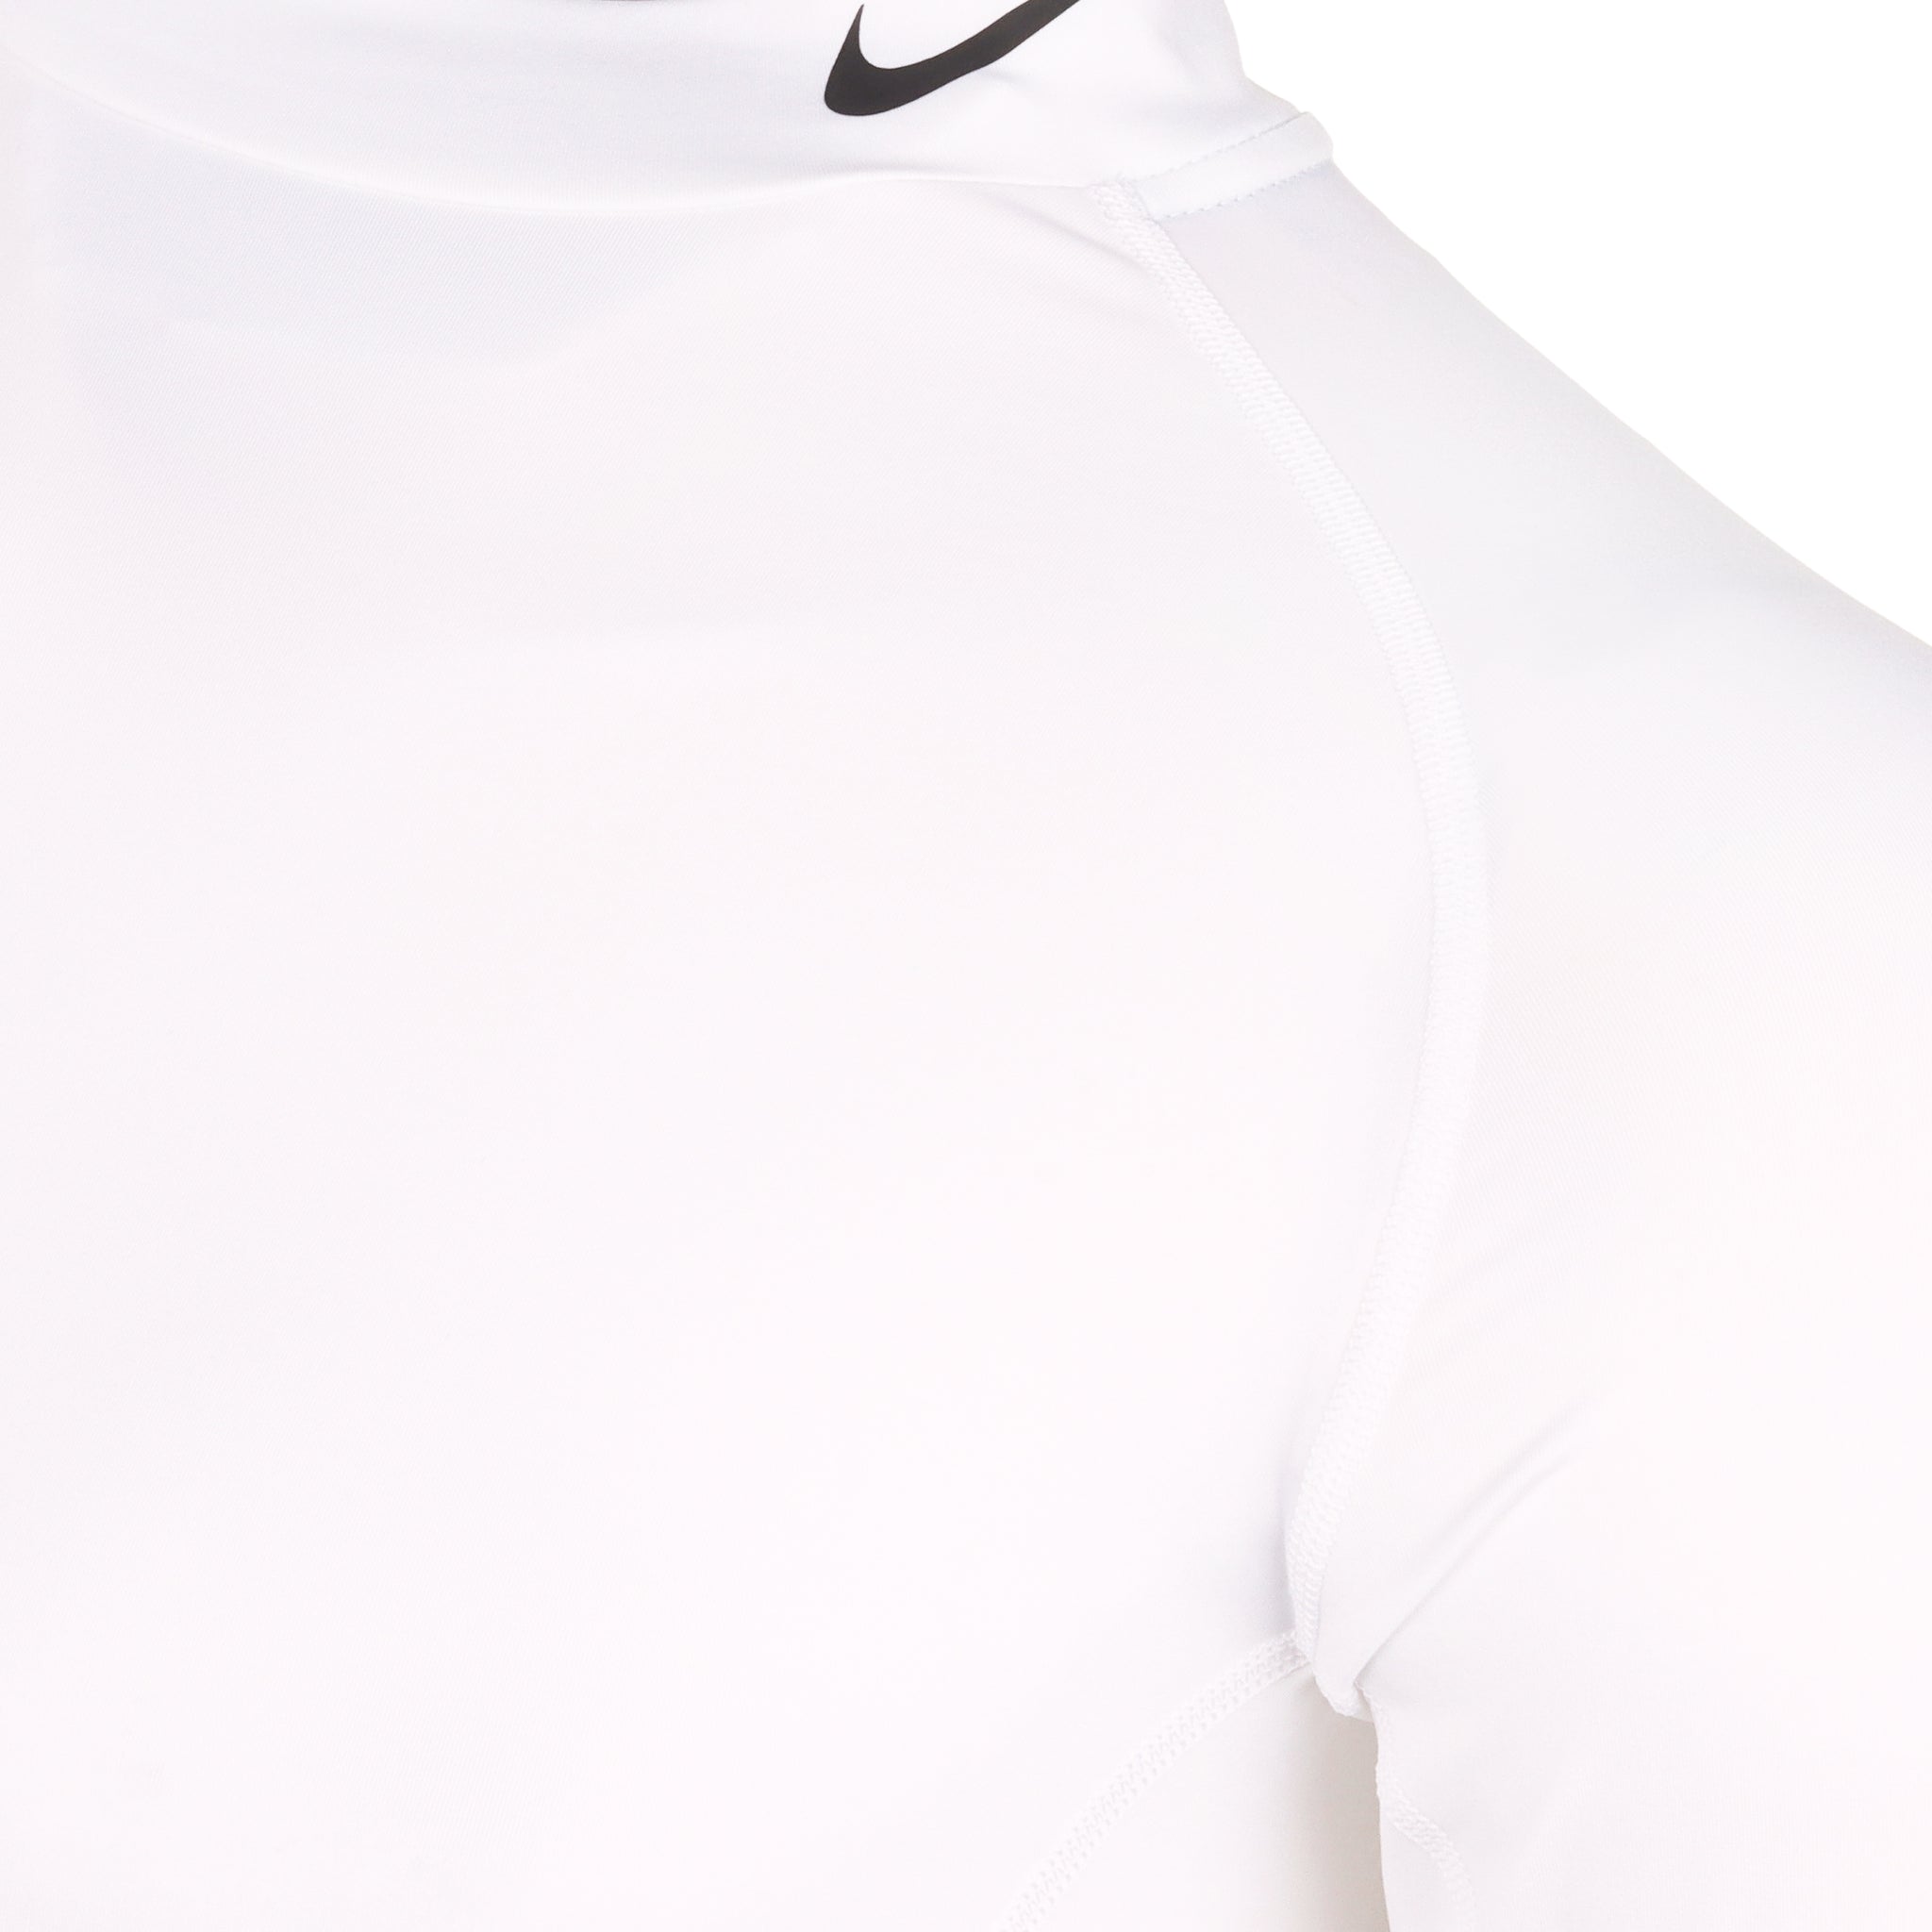 nike-golf-pro-long-sleeve-mock-baselayer-fb7908-100-white